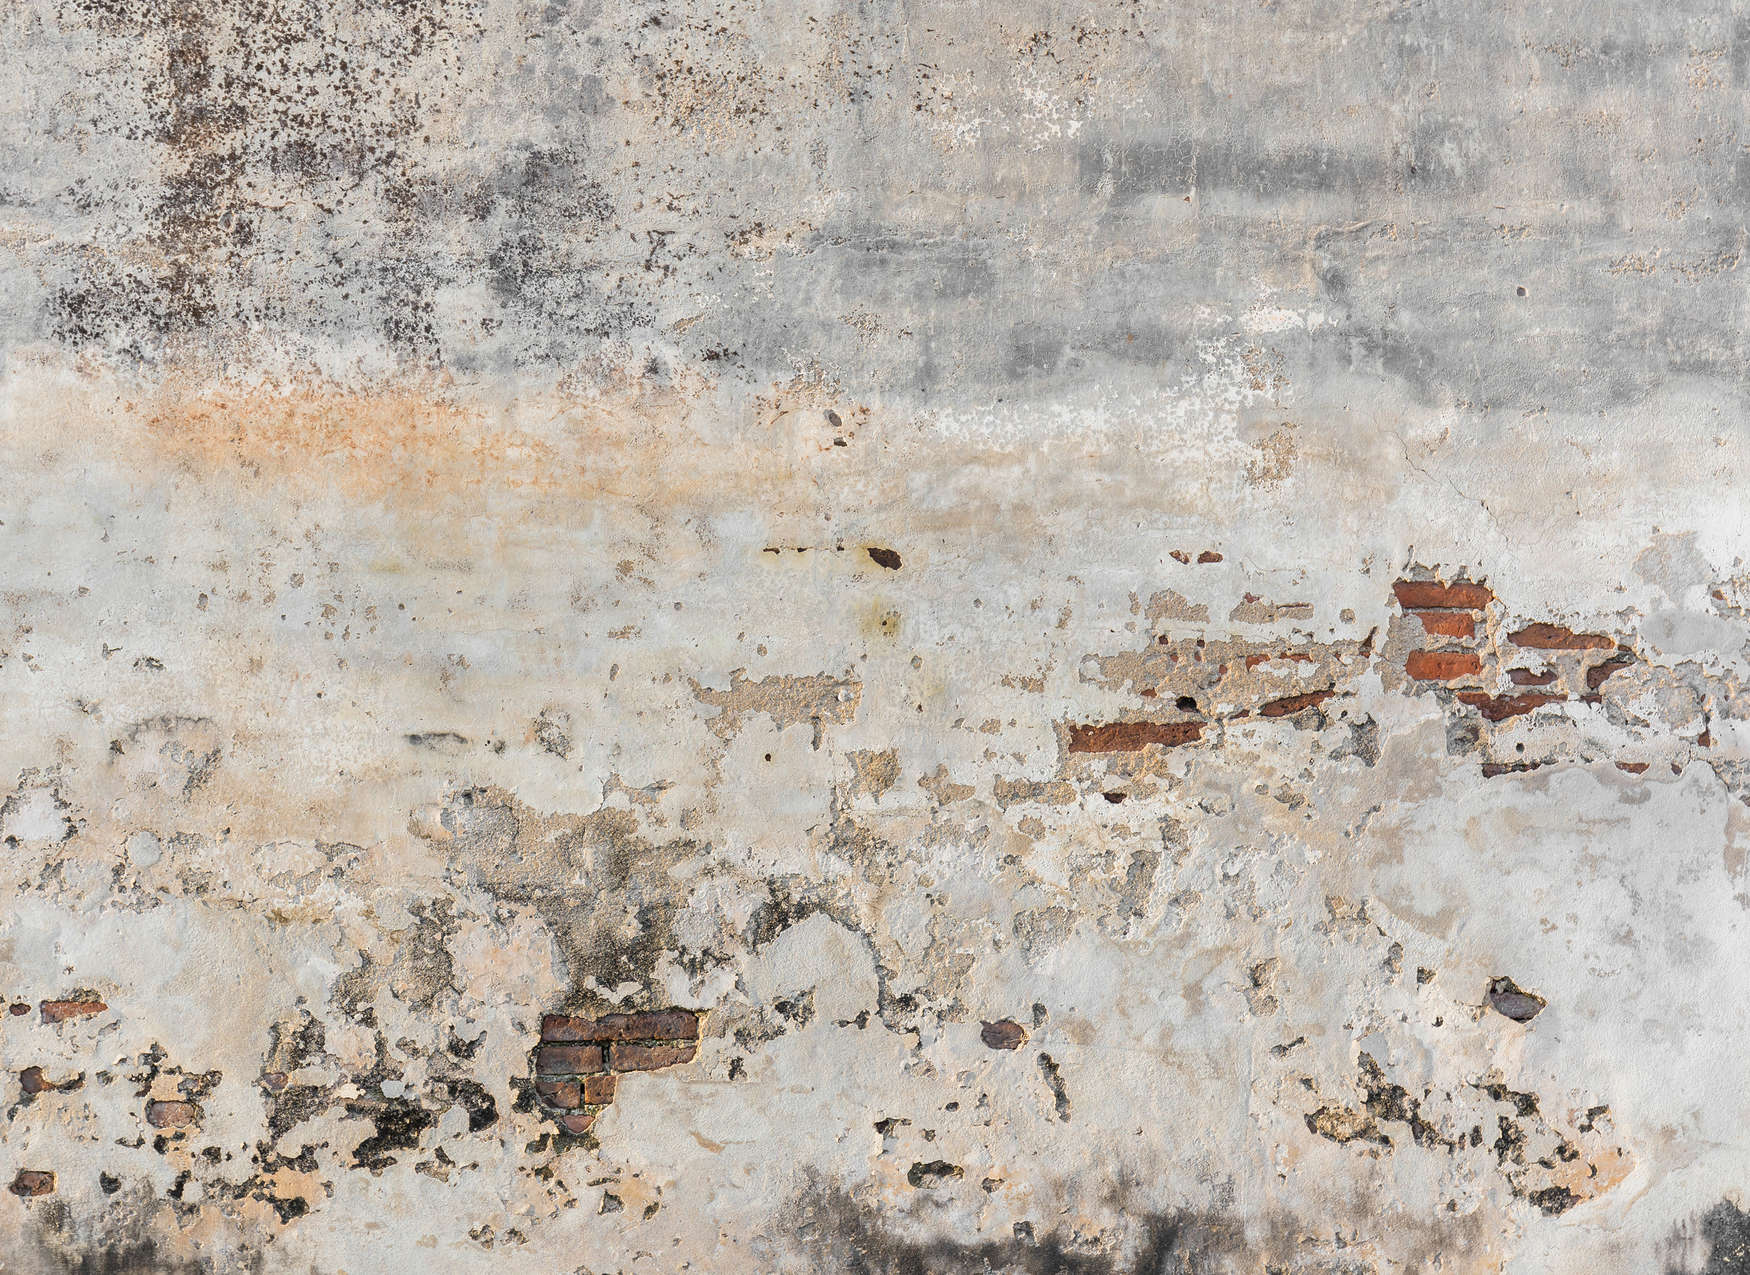             Old & Plastered Brick Wall Wall Mural - Grey, Brown
        